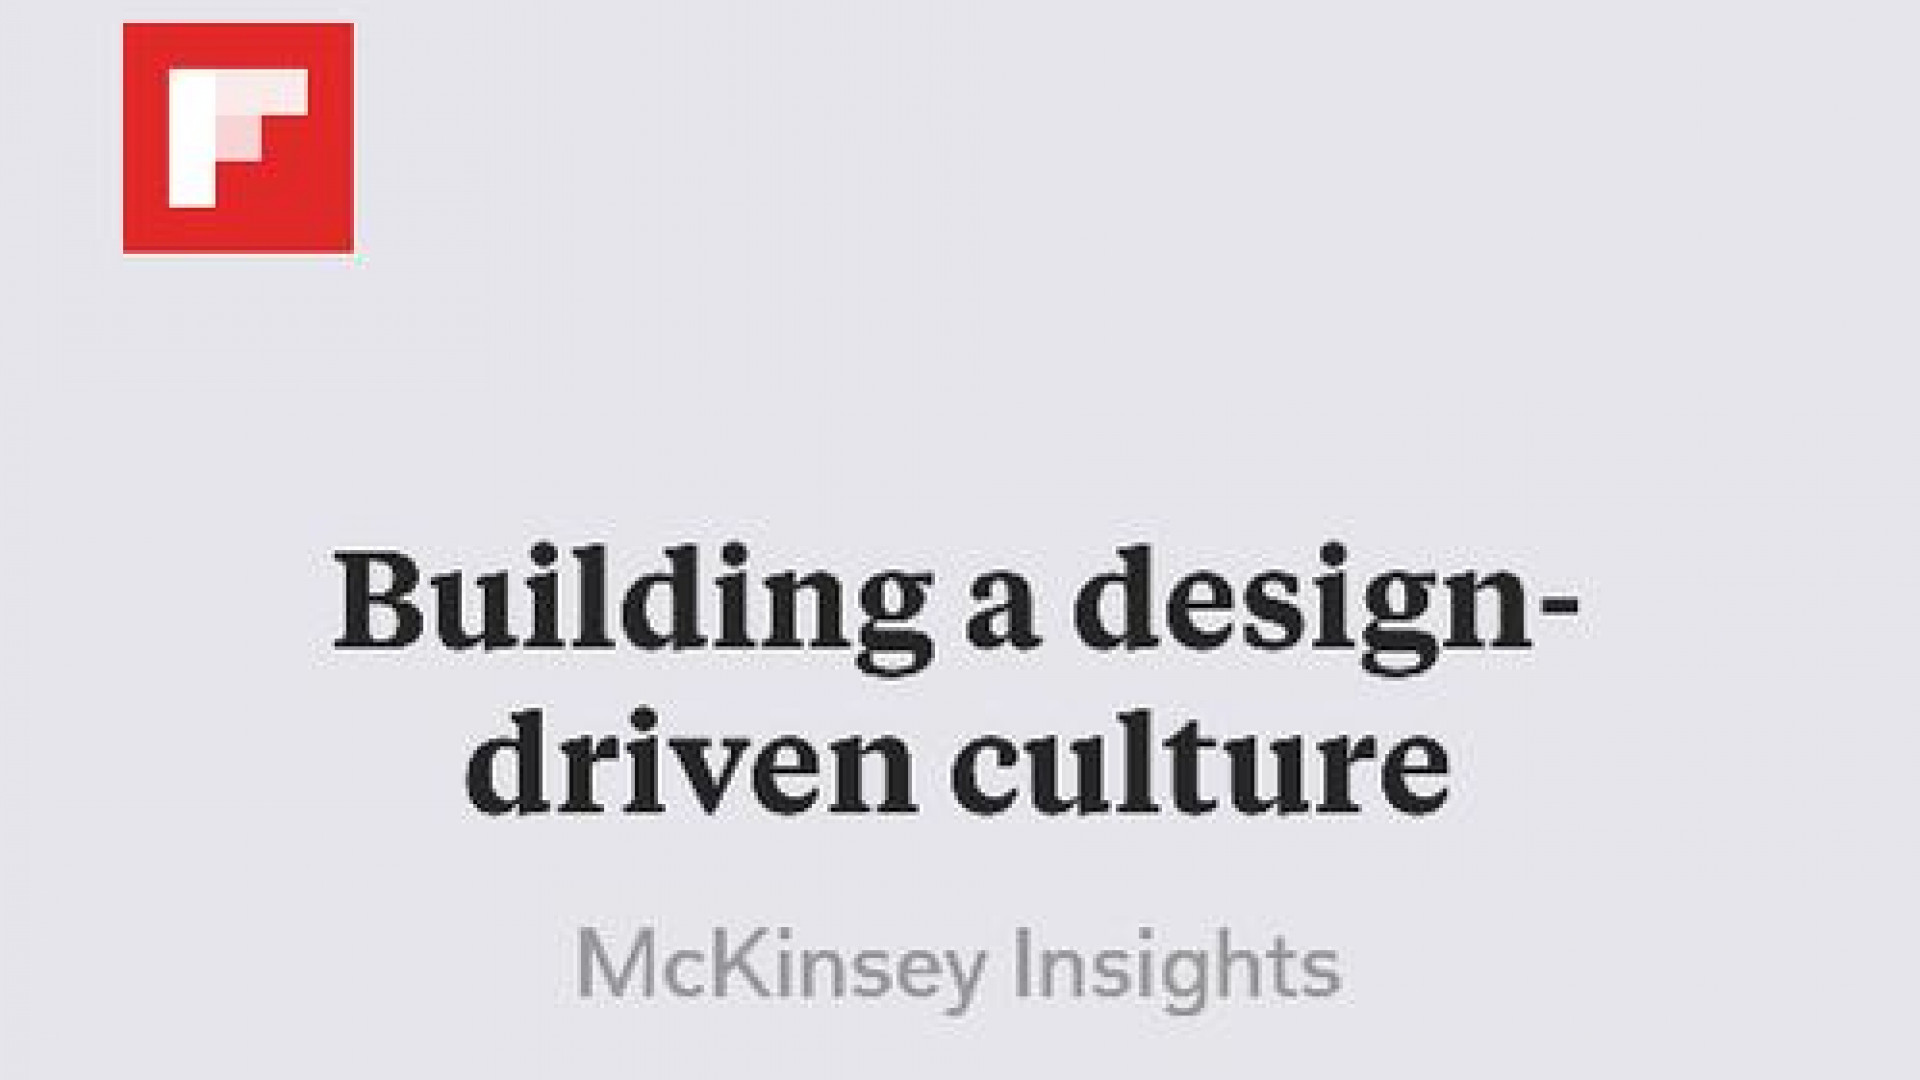 Design driven culture